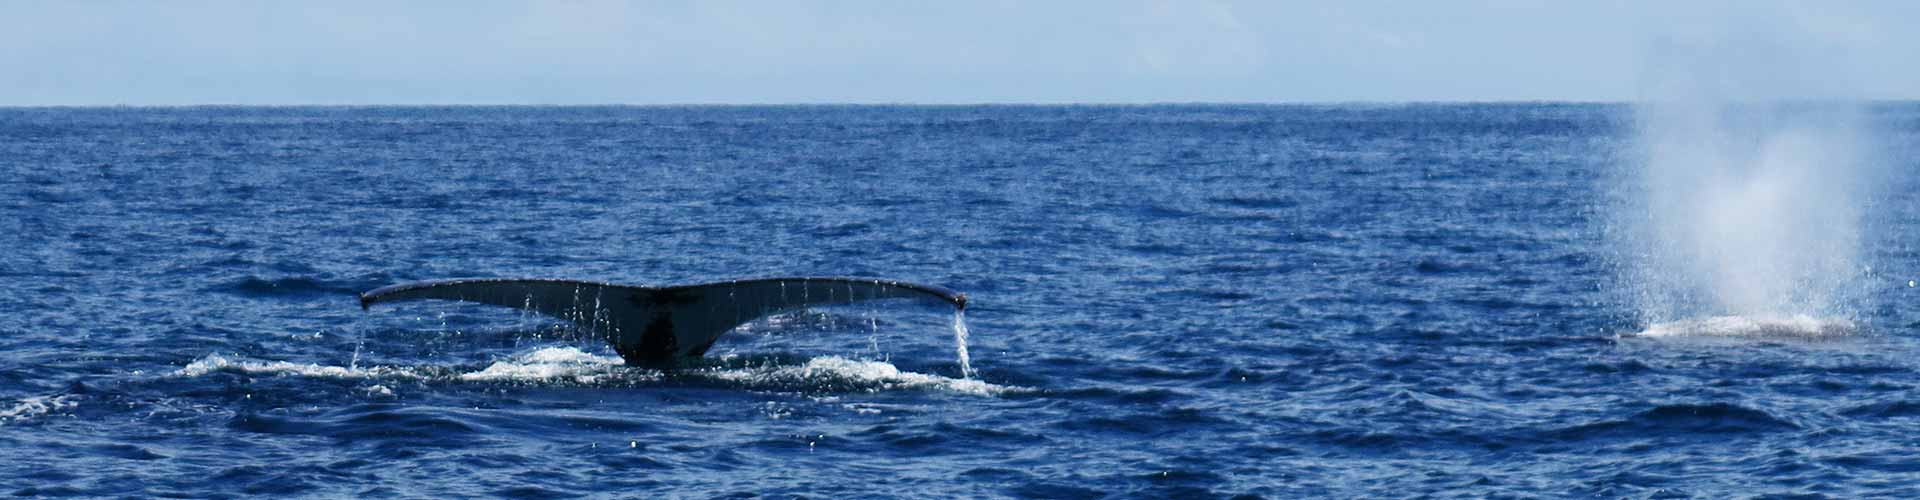 Manta Diving - Biologia marina - Balene